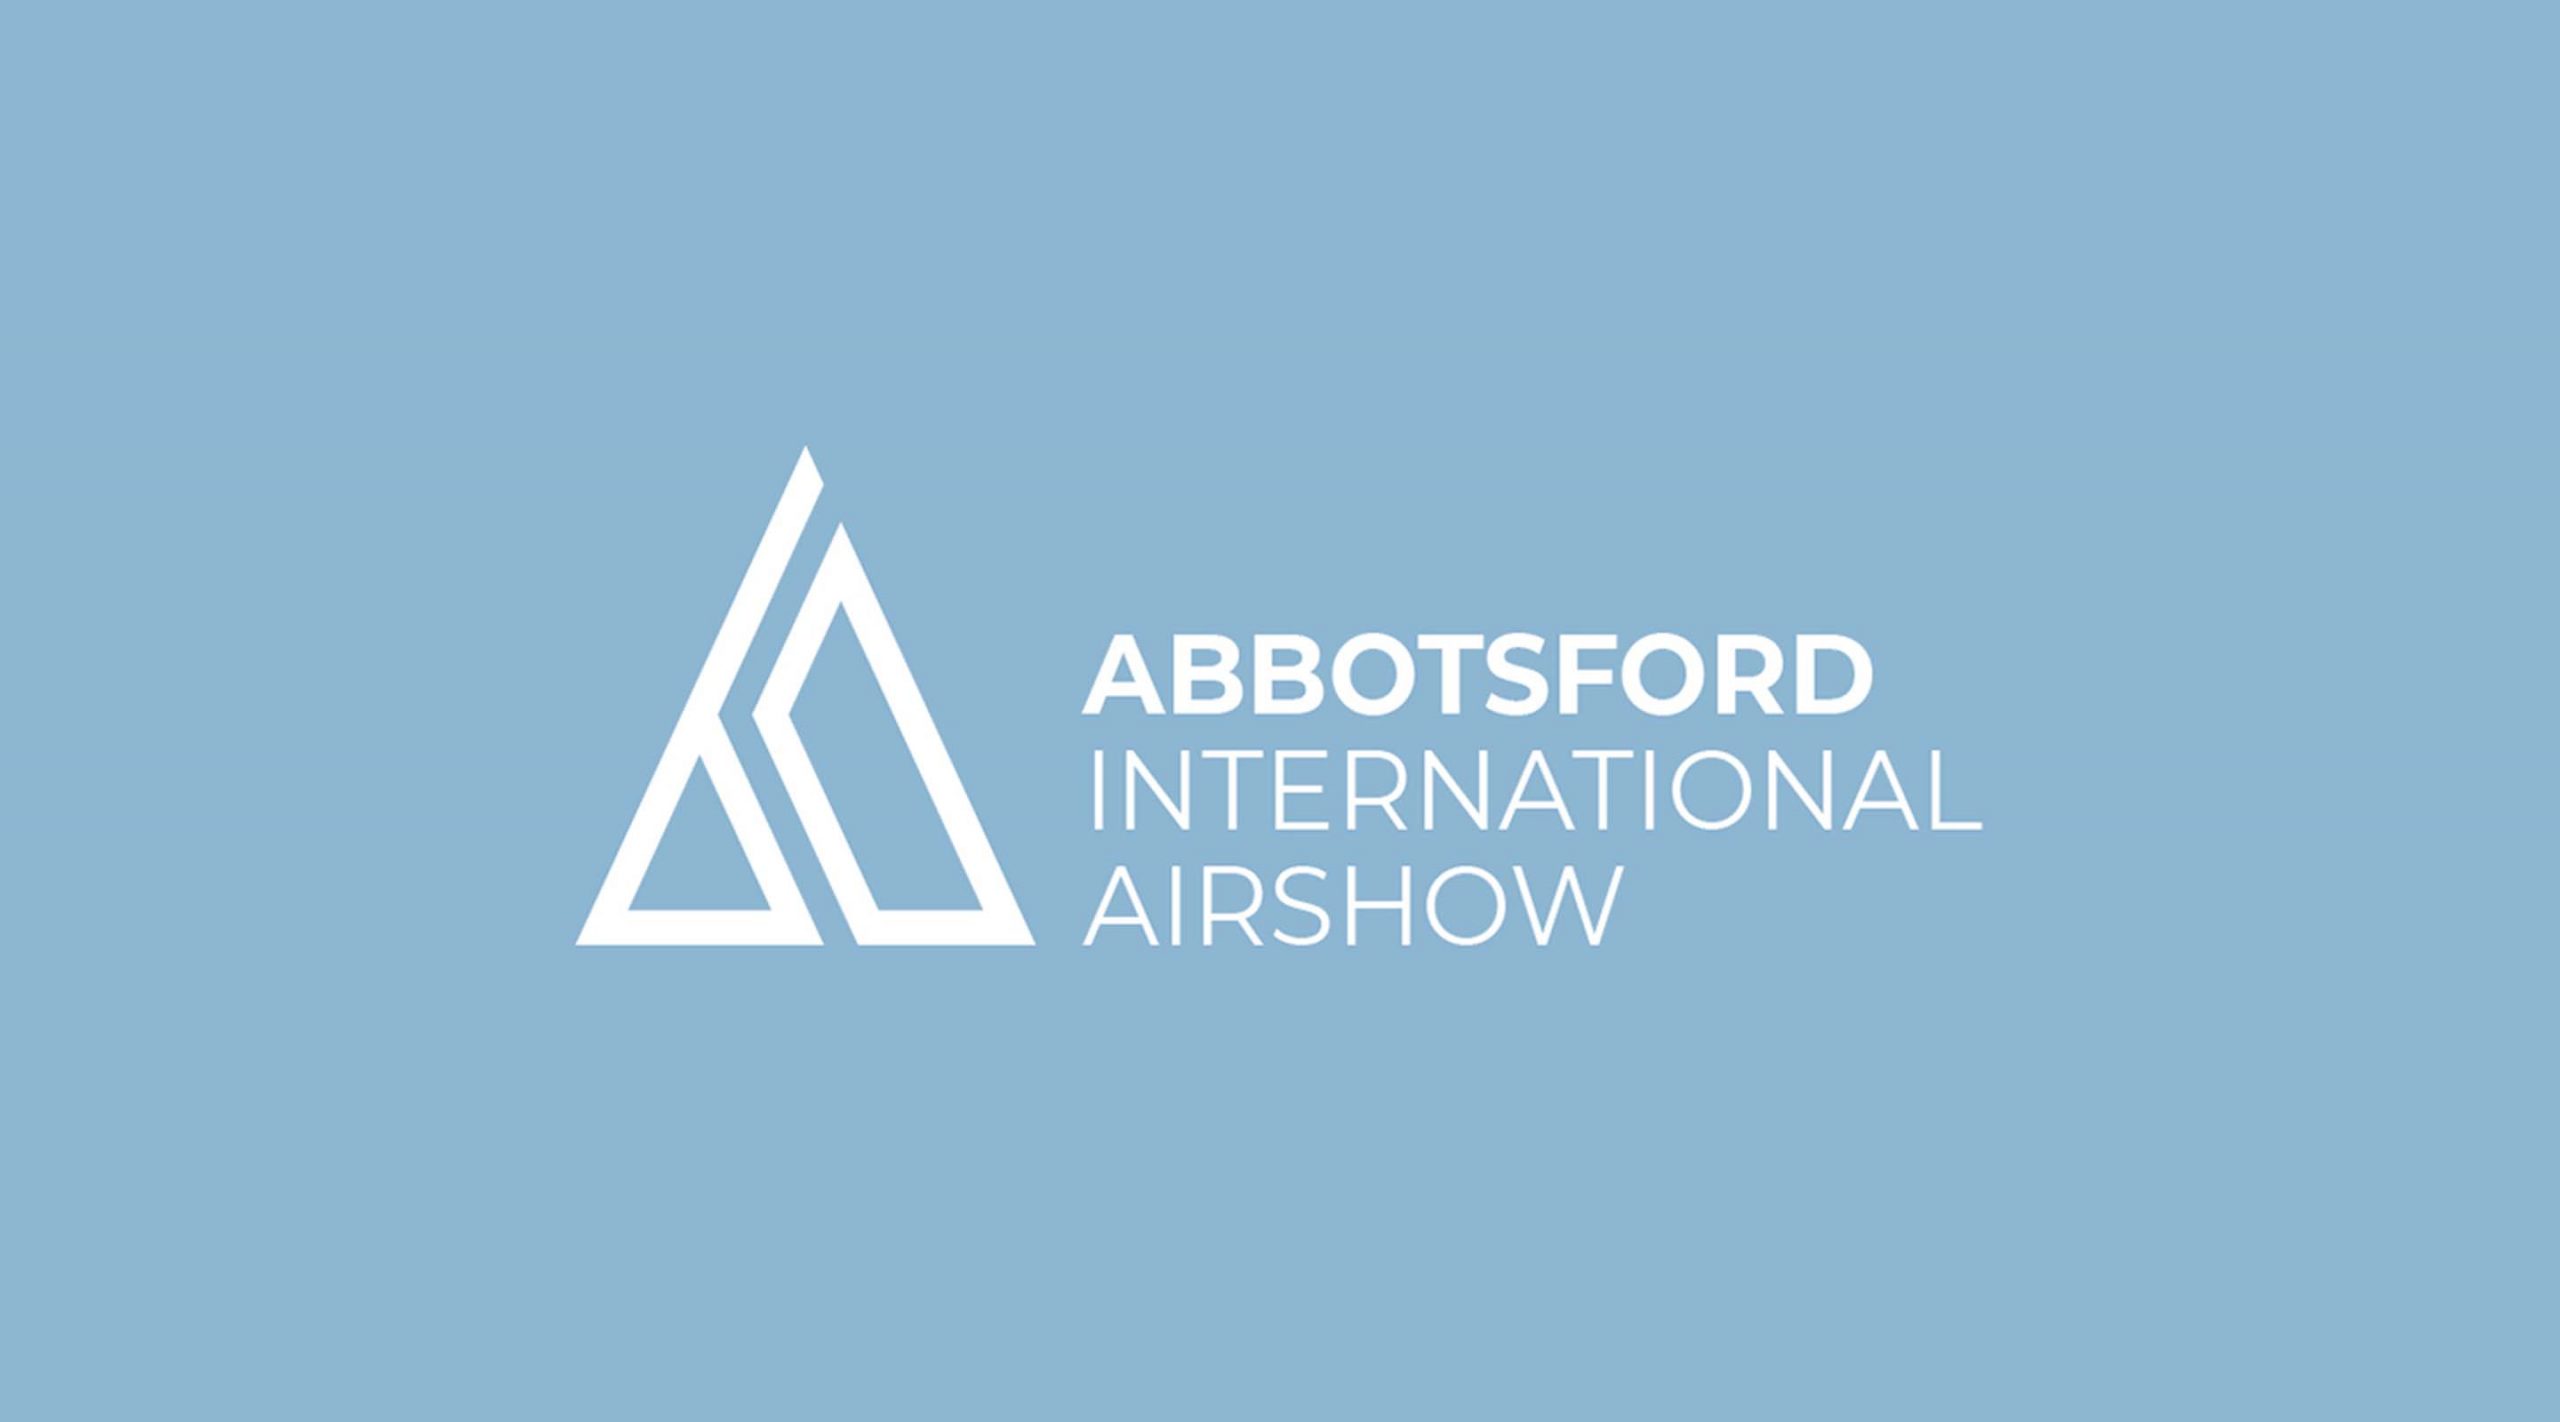 Airshow logo